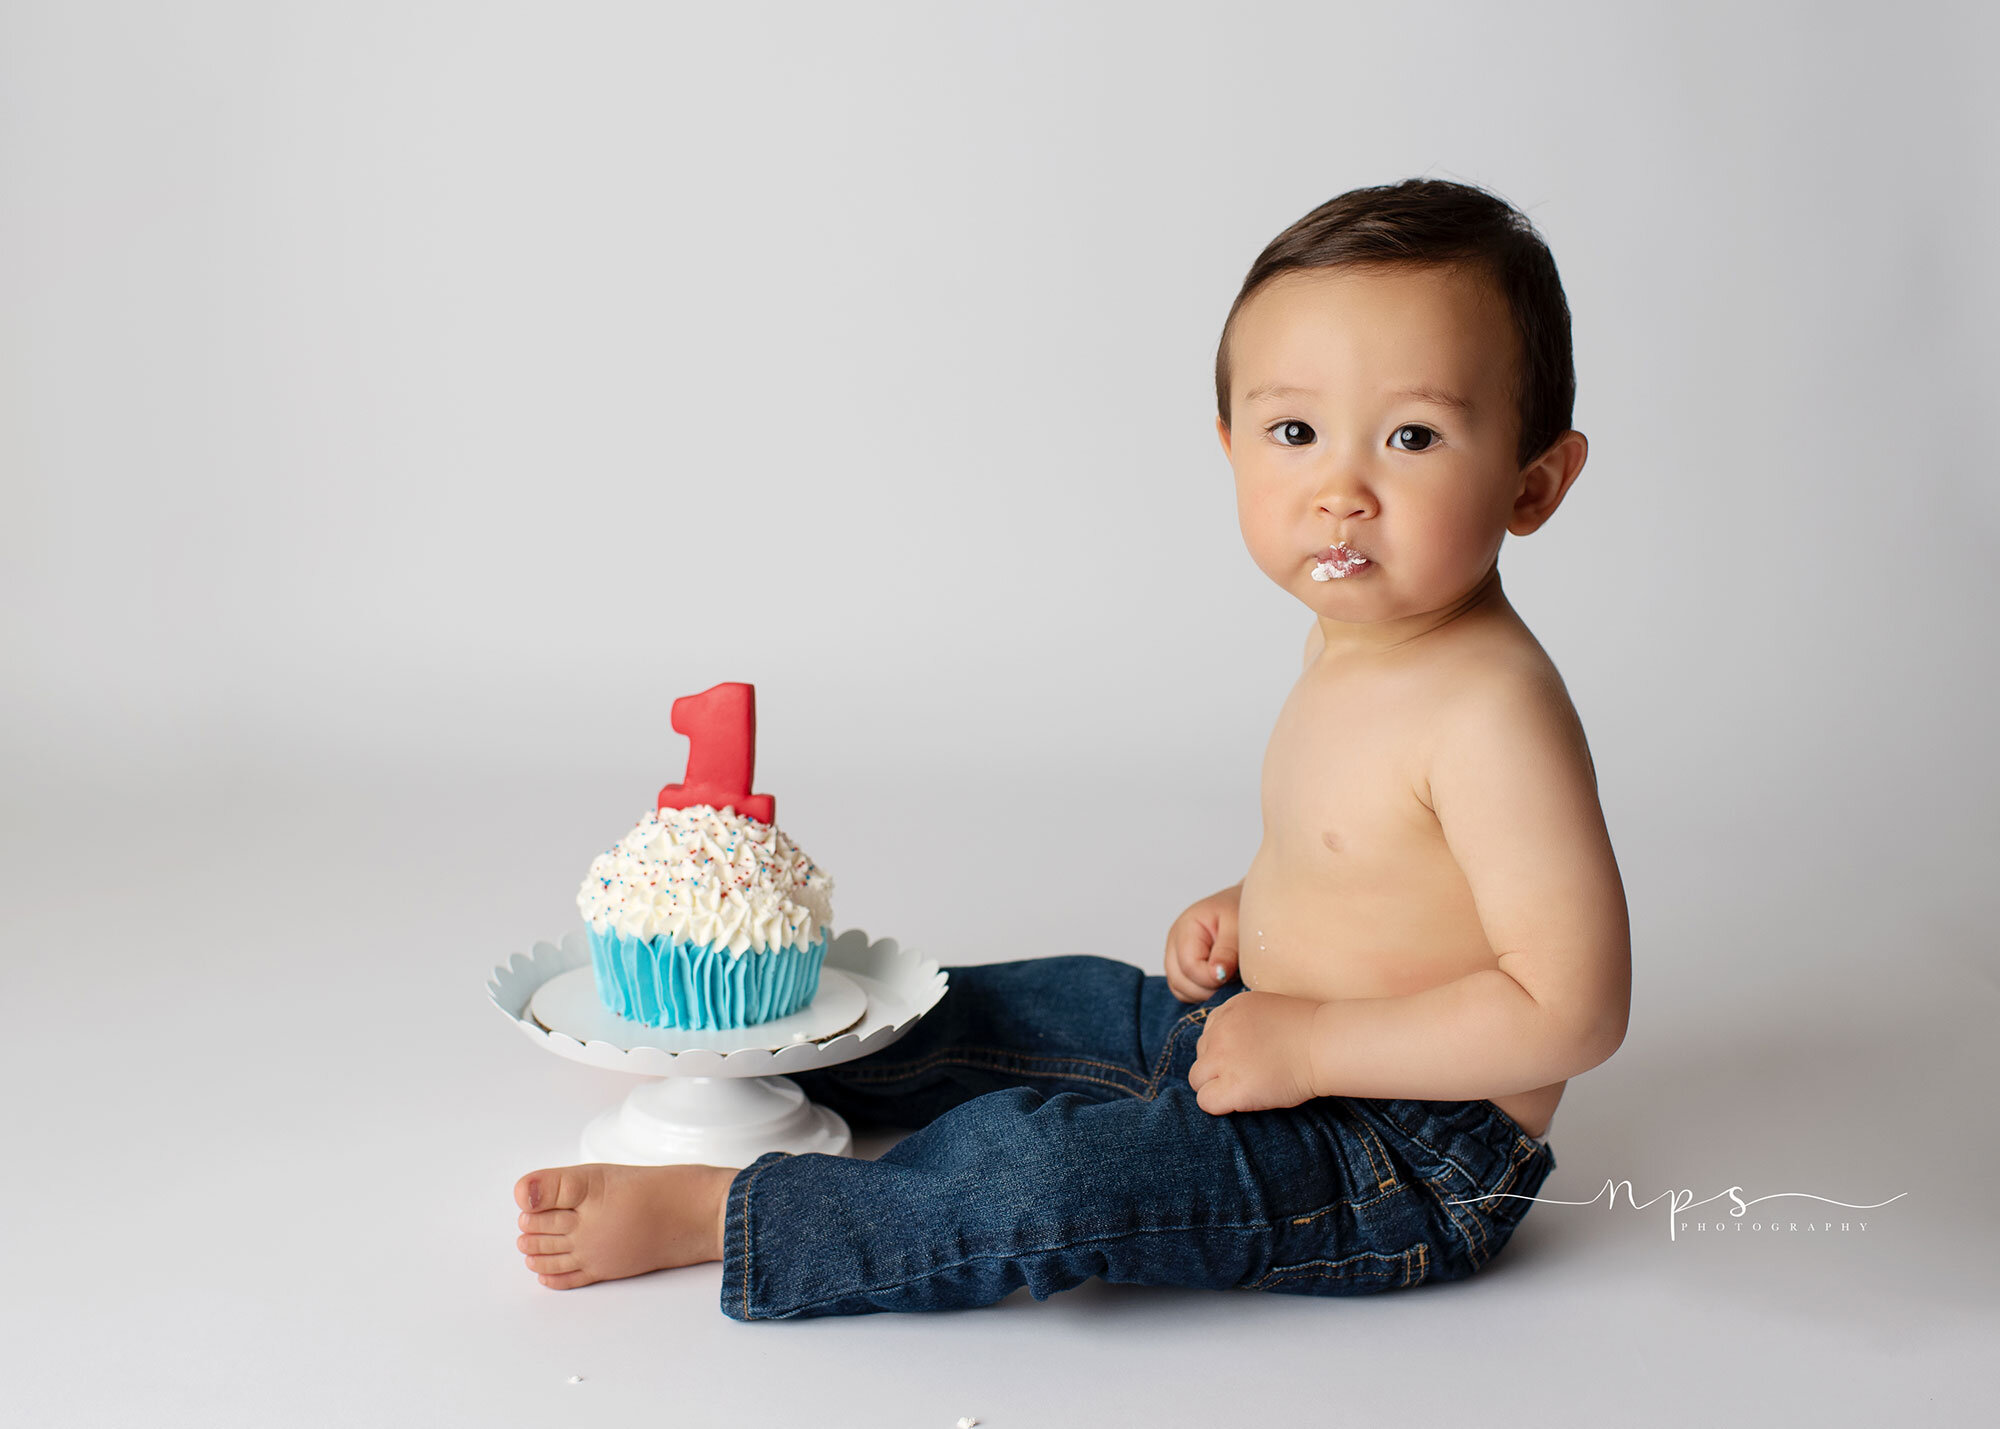 Cake Smash Portraits 008 - NPS Photography